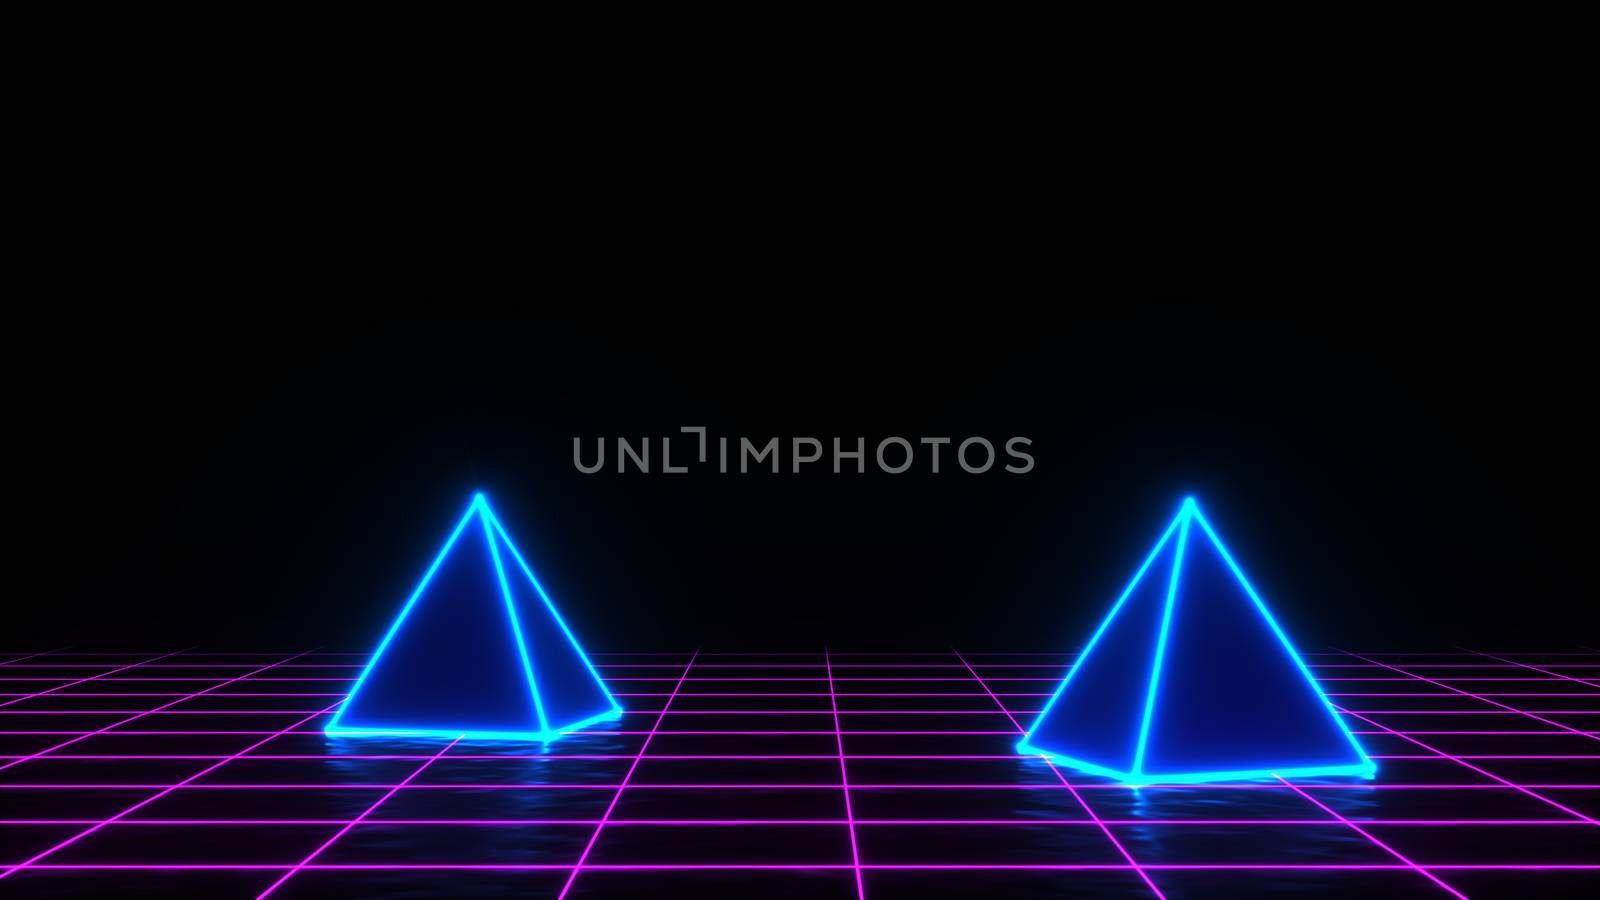 3d render of neon pyramid on grid background. Banner design. Retrowave, synthwave, vaporwave illustration. Party and sales concept by Shanvood